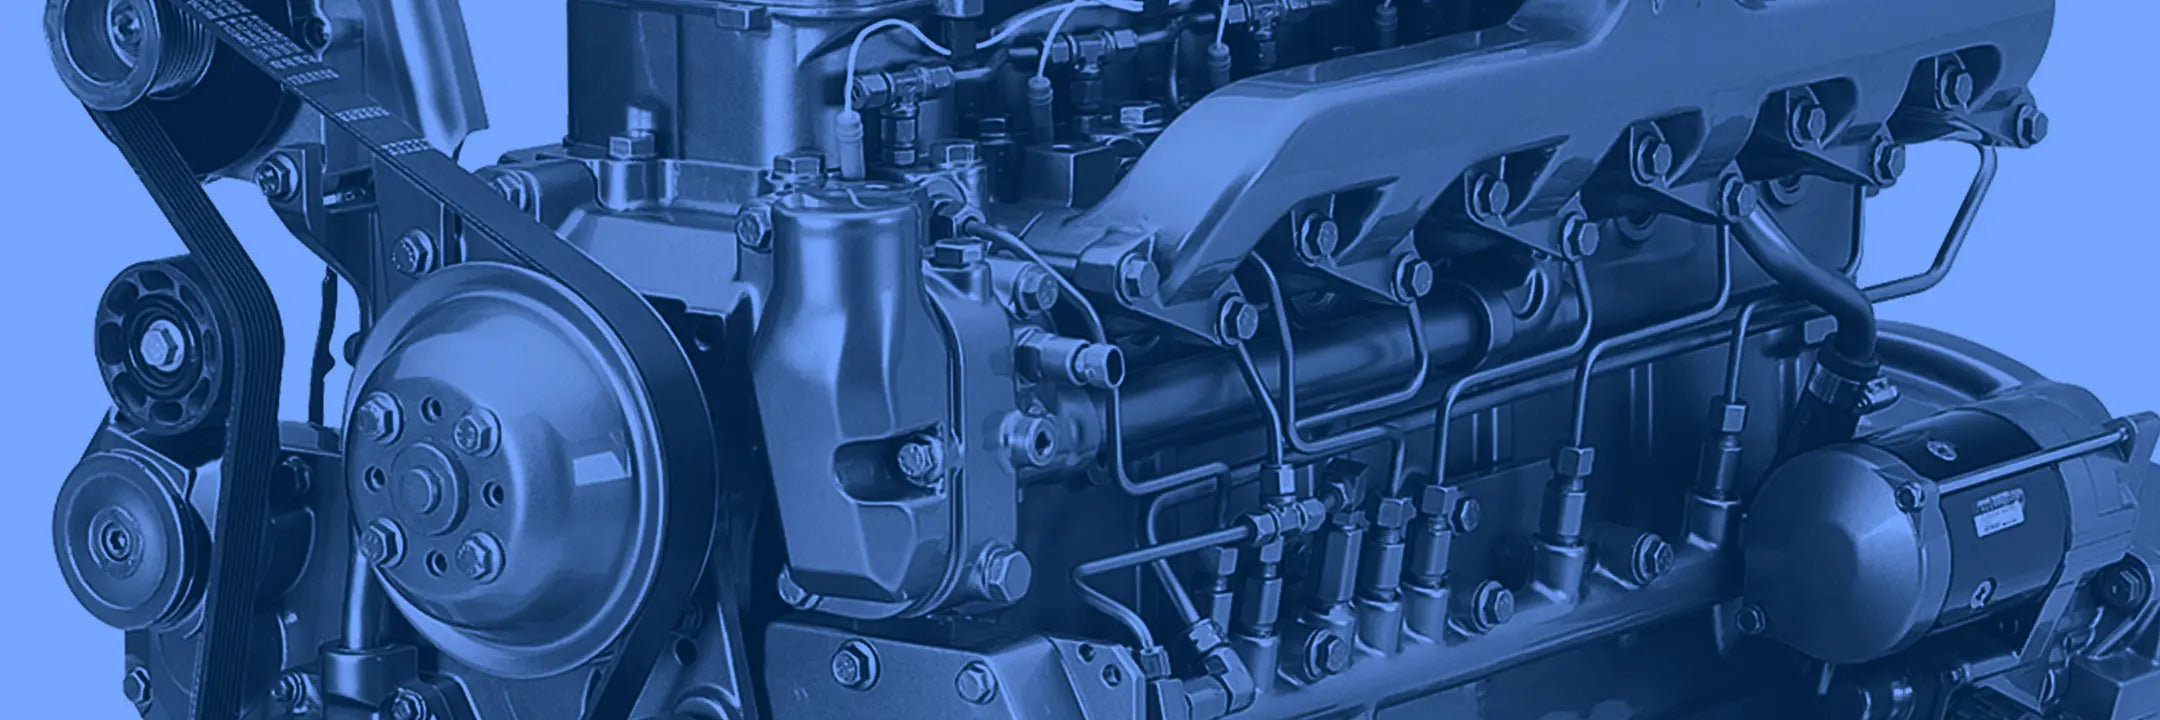 diesel engine inspection desktop banner